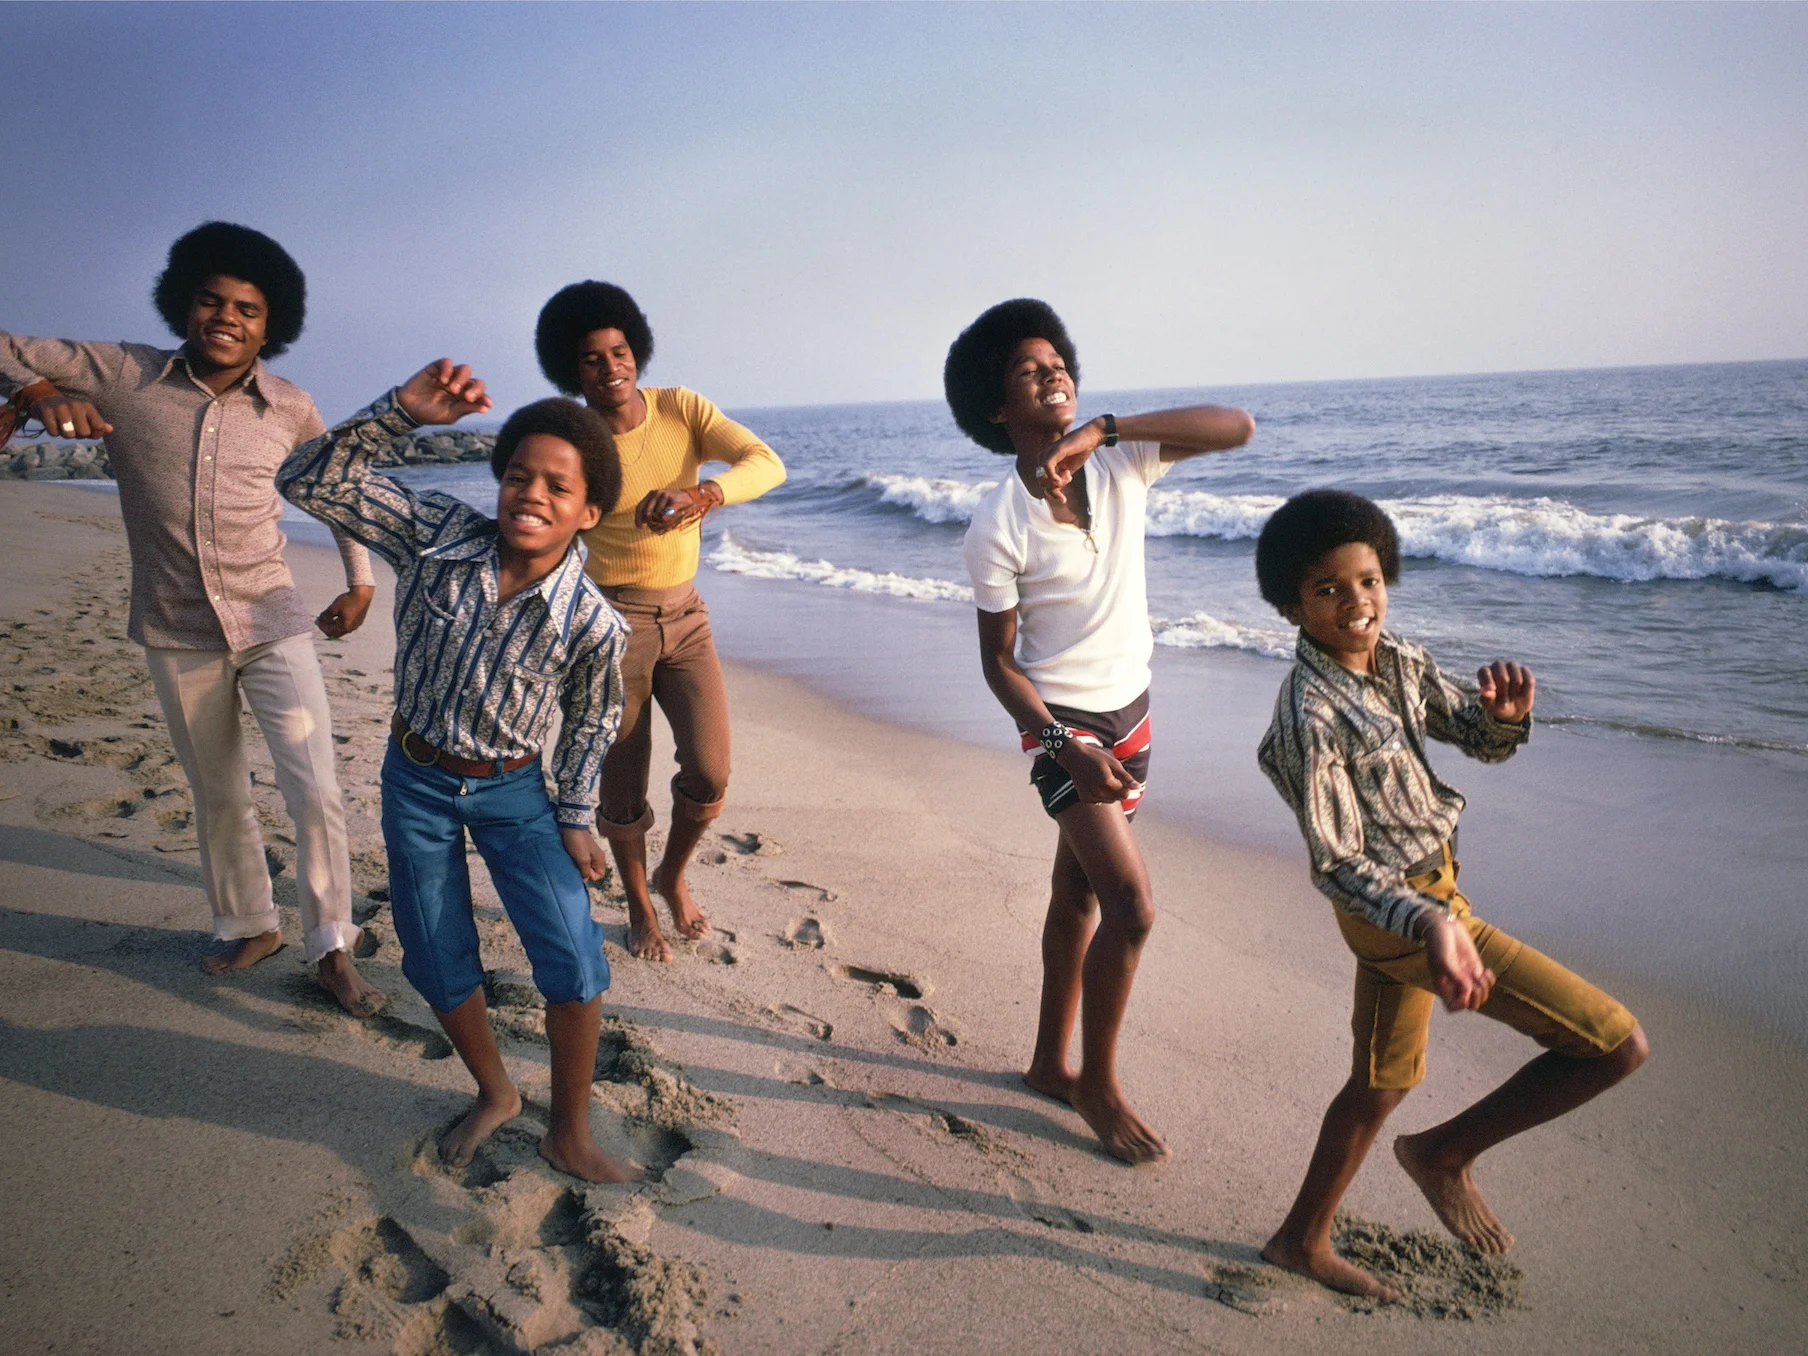 Michael Jackson, Jackson 5, Malibu Beach, 1970